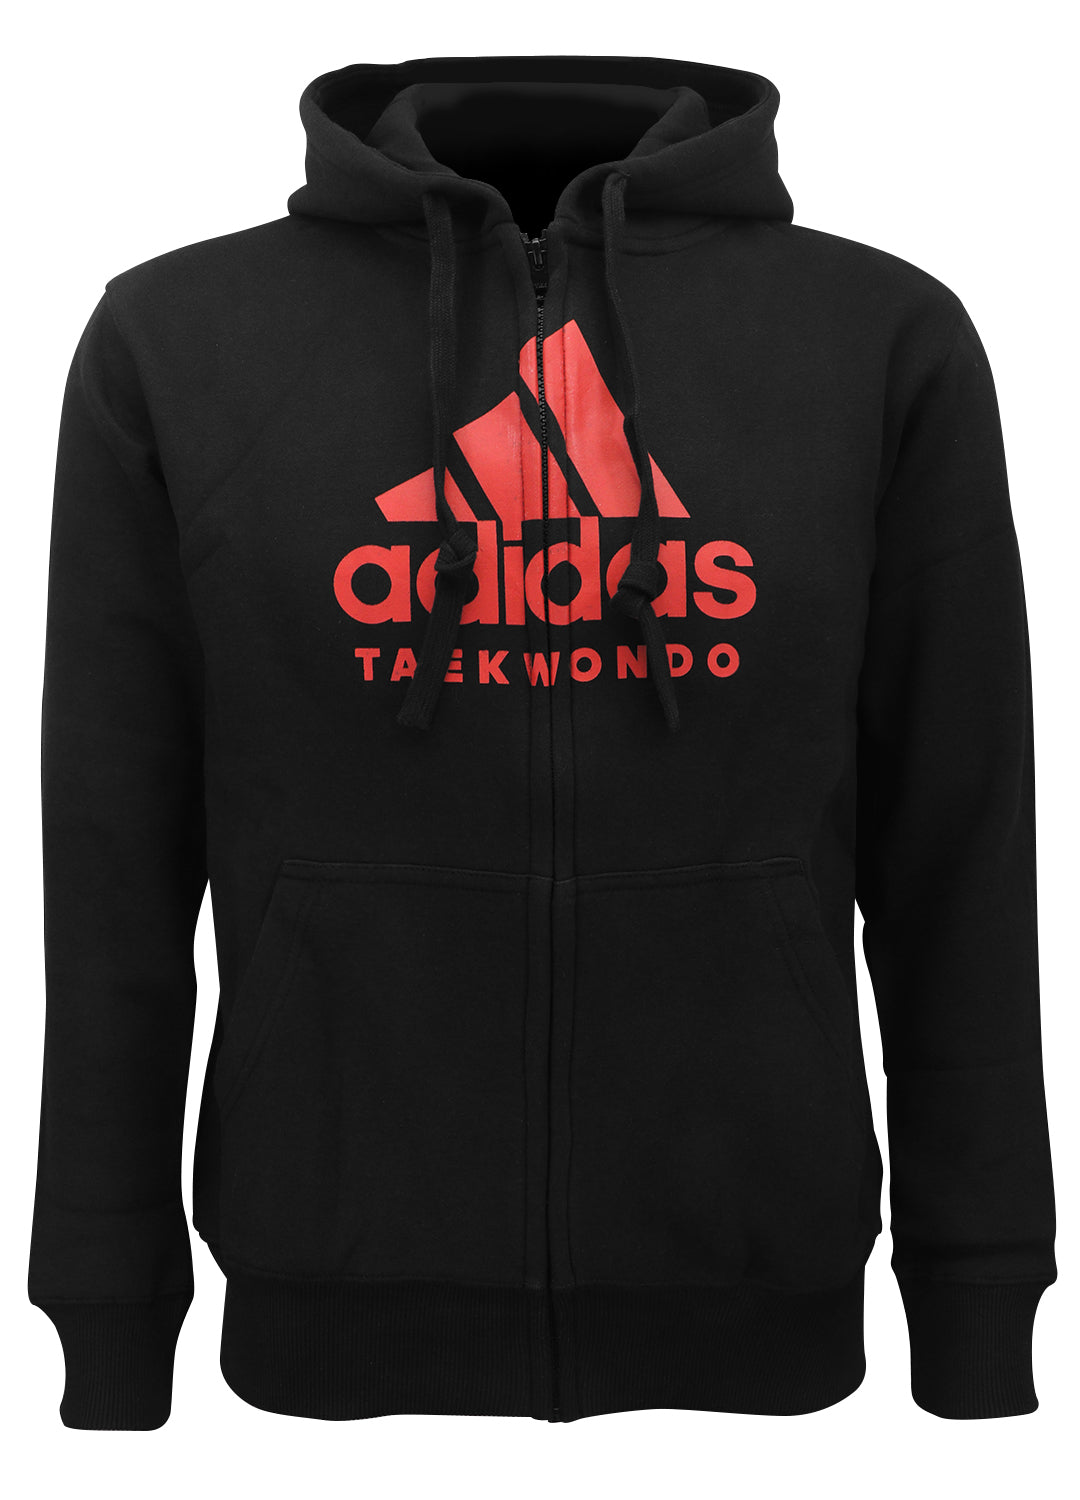 adidas taekwondo hoodie